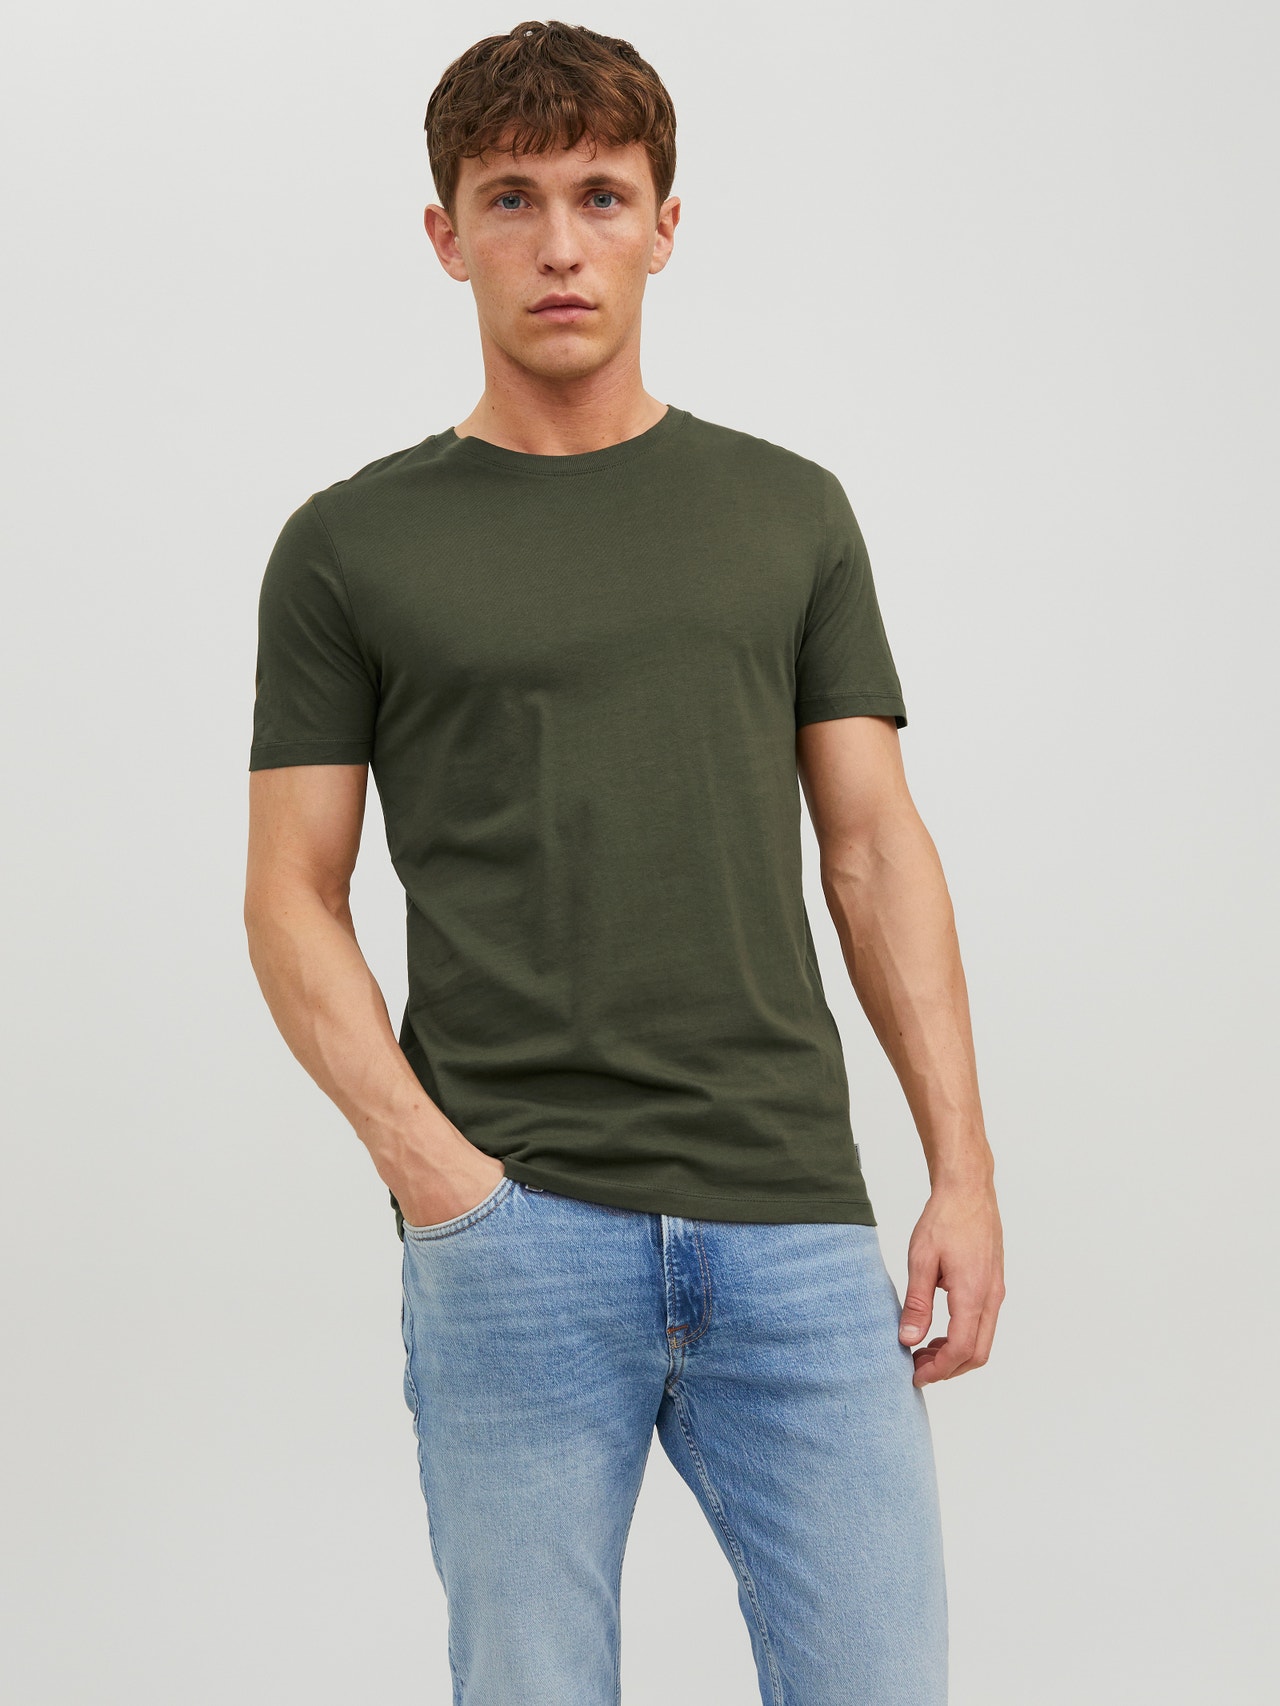 plain dark green t shirt